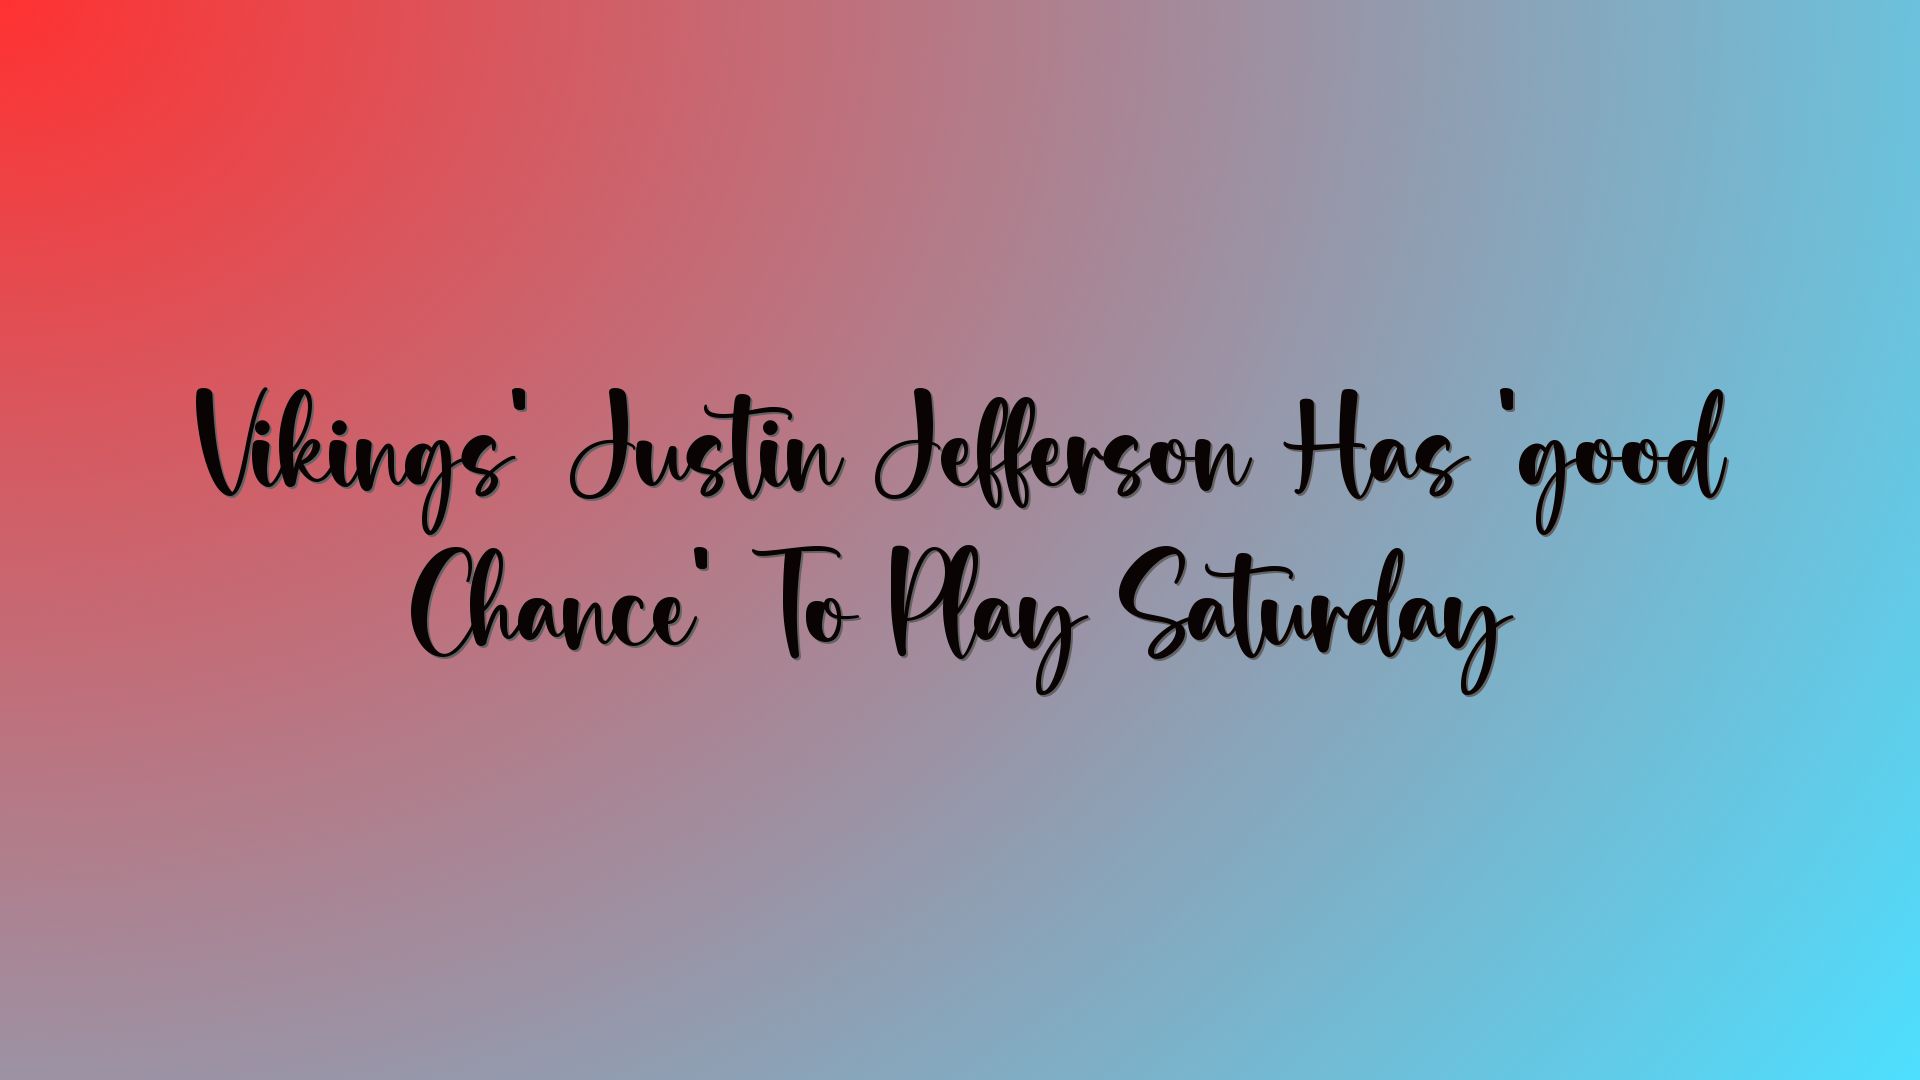 Vikings’ Justin Jefferson Has ‘good Chance’ To Play Saturday